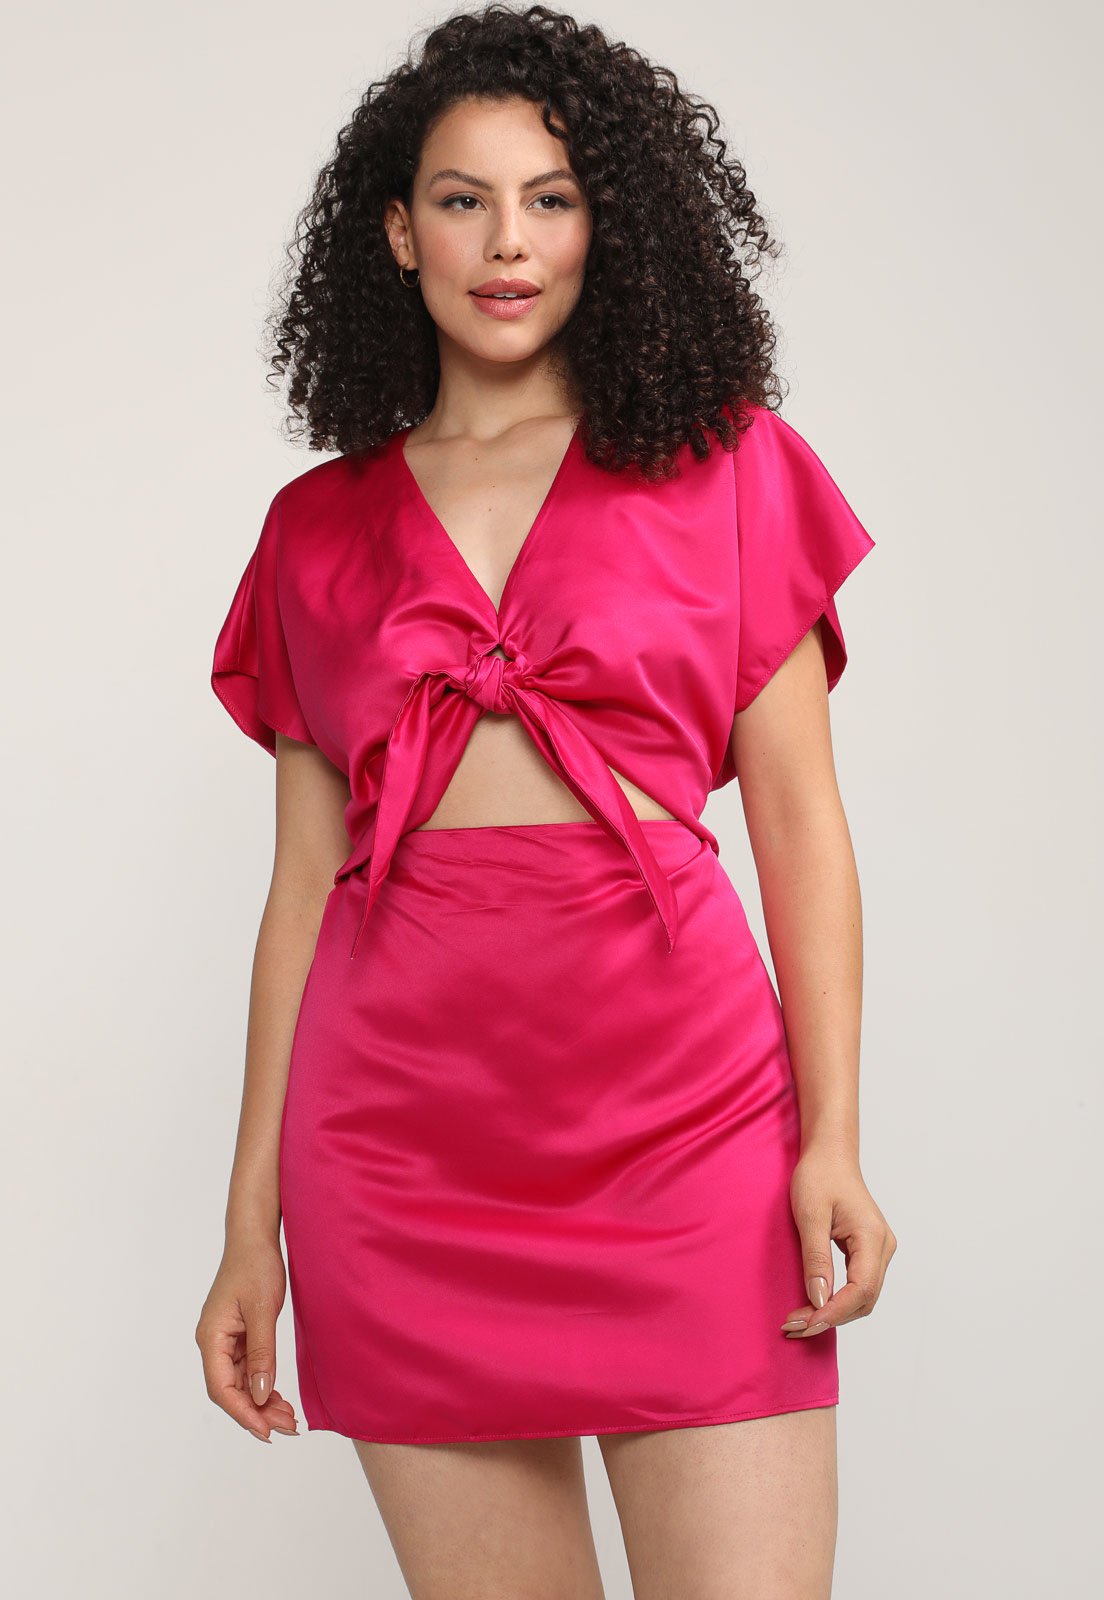 Vestido rosa satin cut out – dress&dress